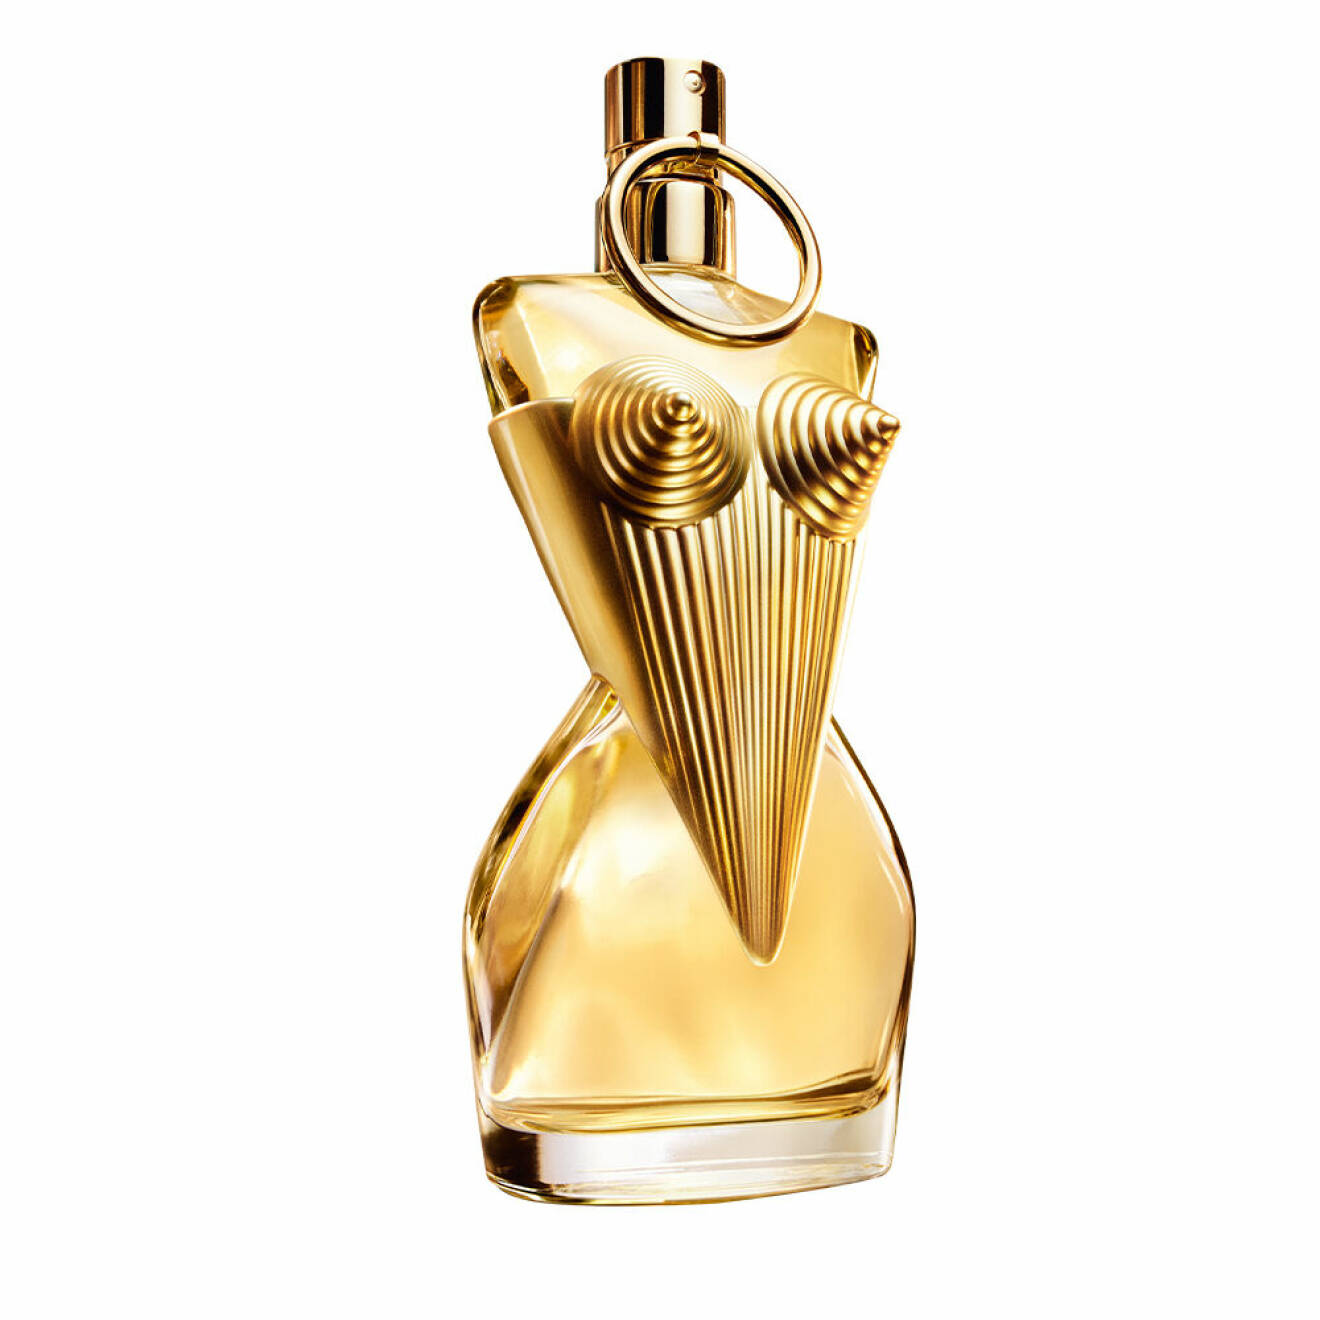 Parfym från Jean Paul Gaultier